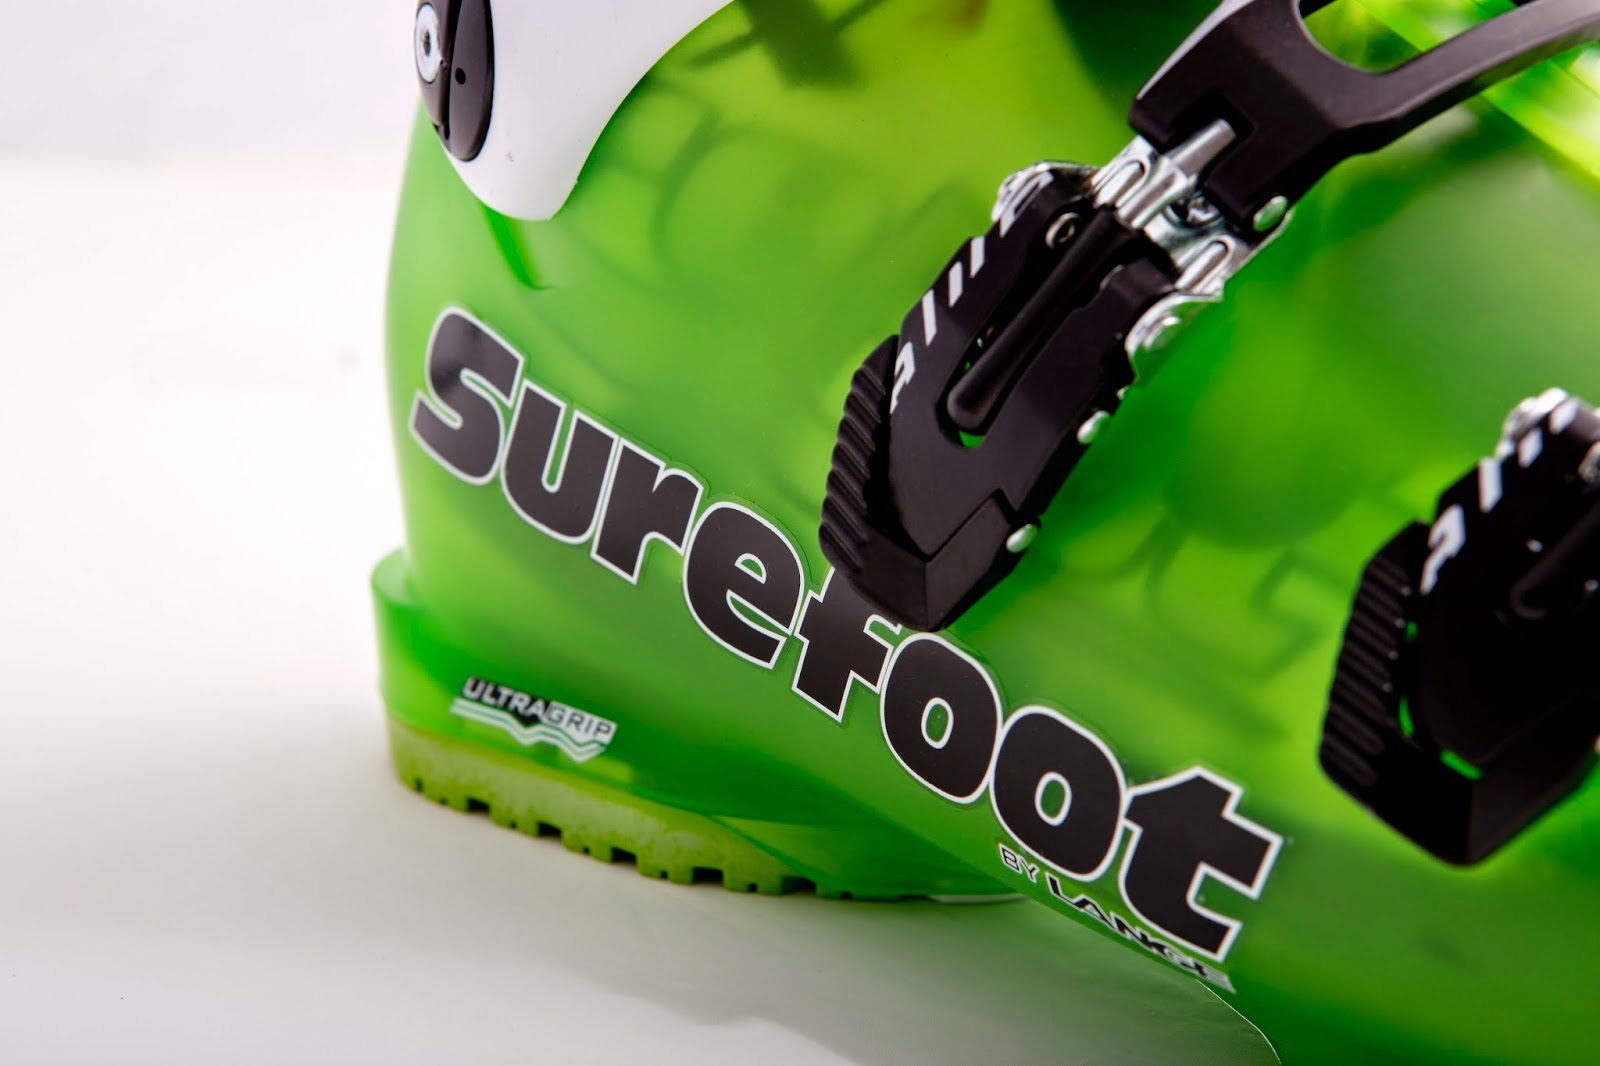 Photo of Surefoot - New York City Ski Boot Shop in New York City, New York, United States - 4 Picture of Point of interest, Establishment, Store, Shoe store